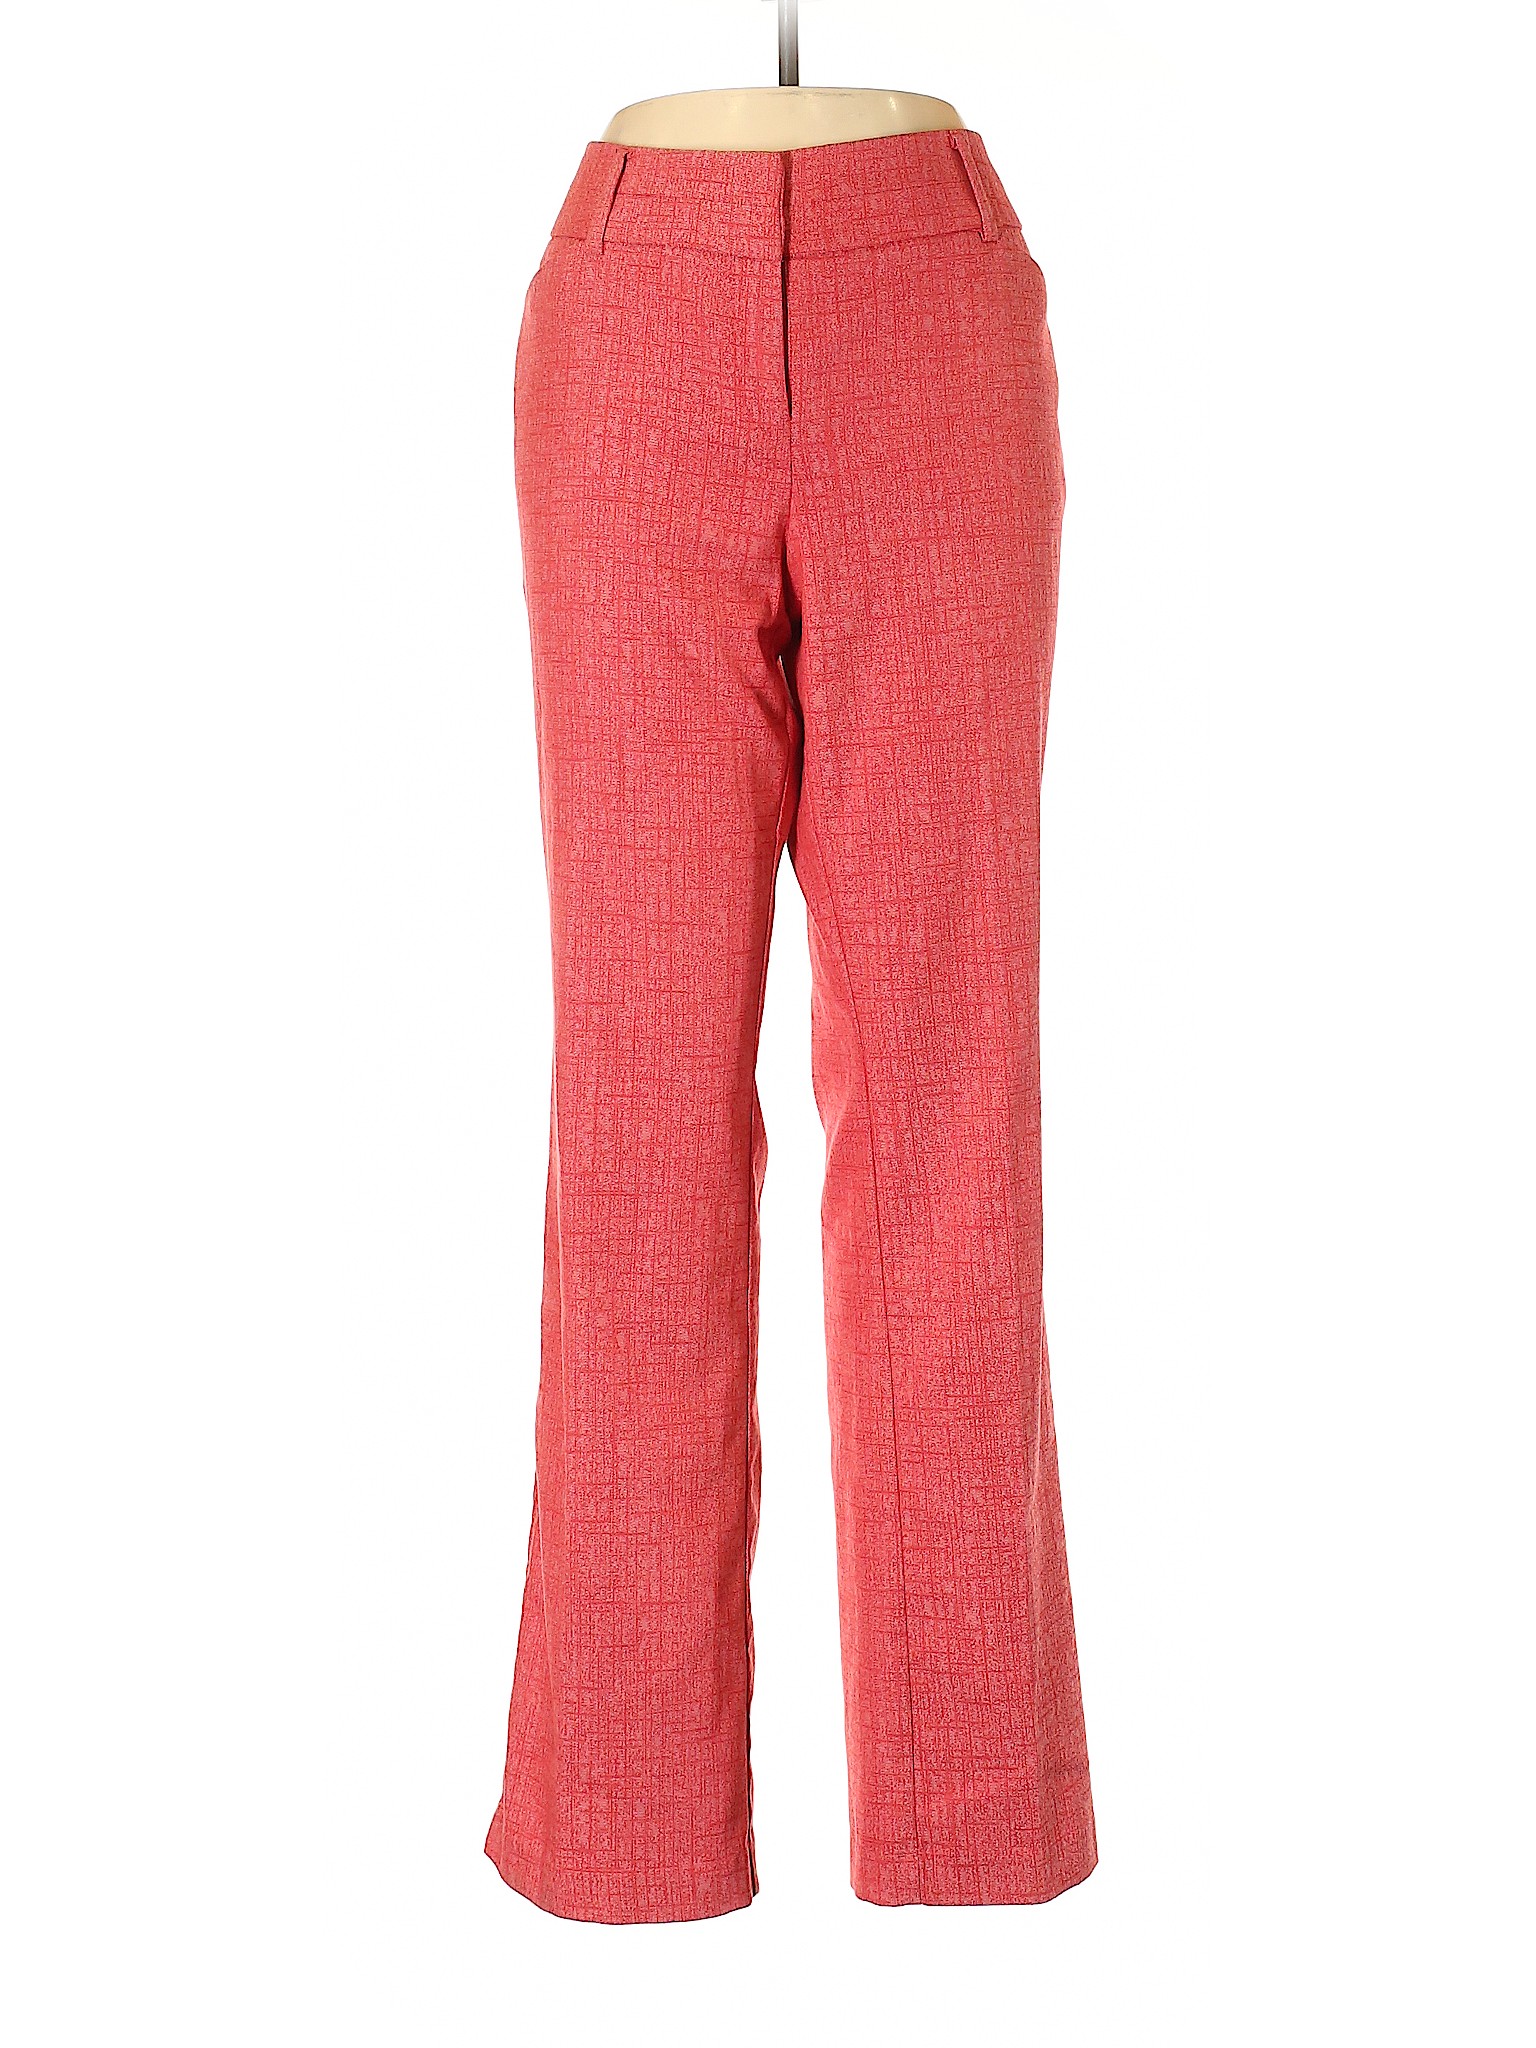 7th Avenue Design Studio New York & Company Women Red Dress Pants 10 | eBay